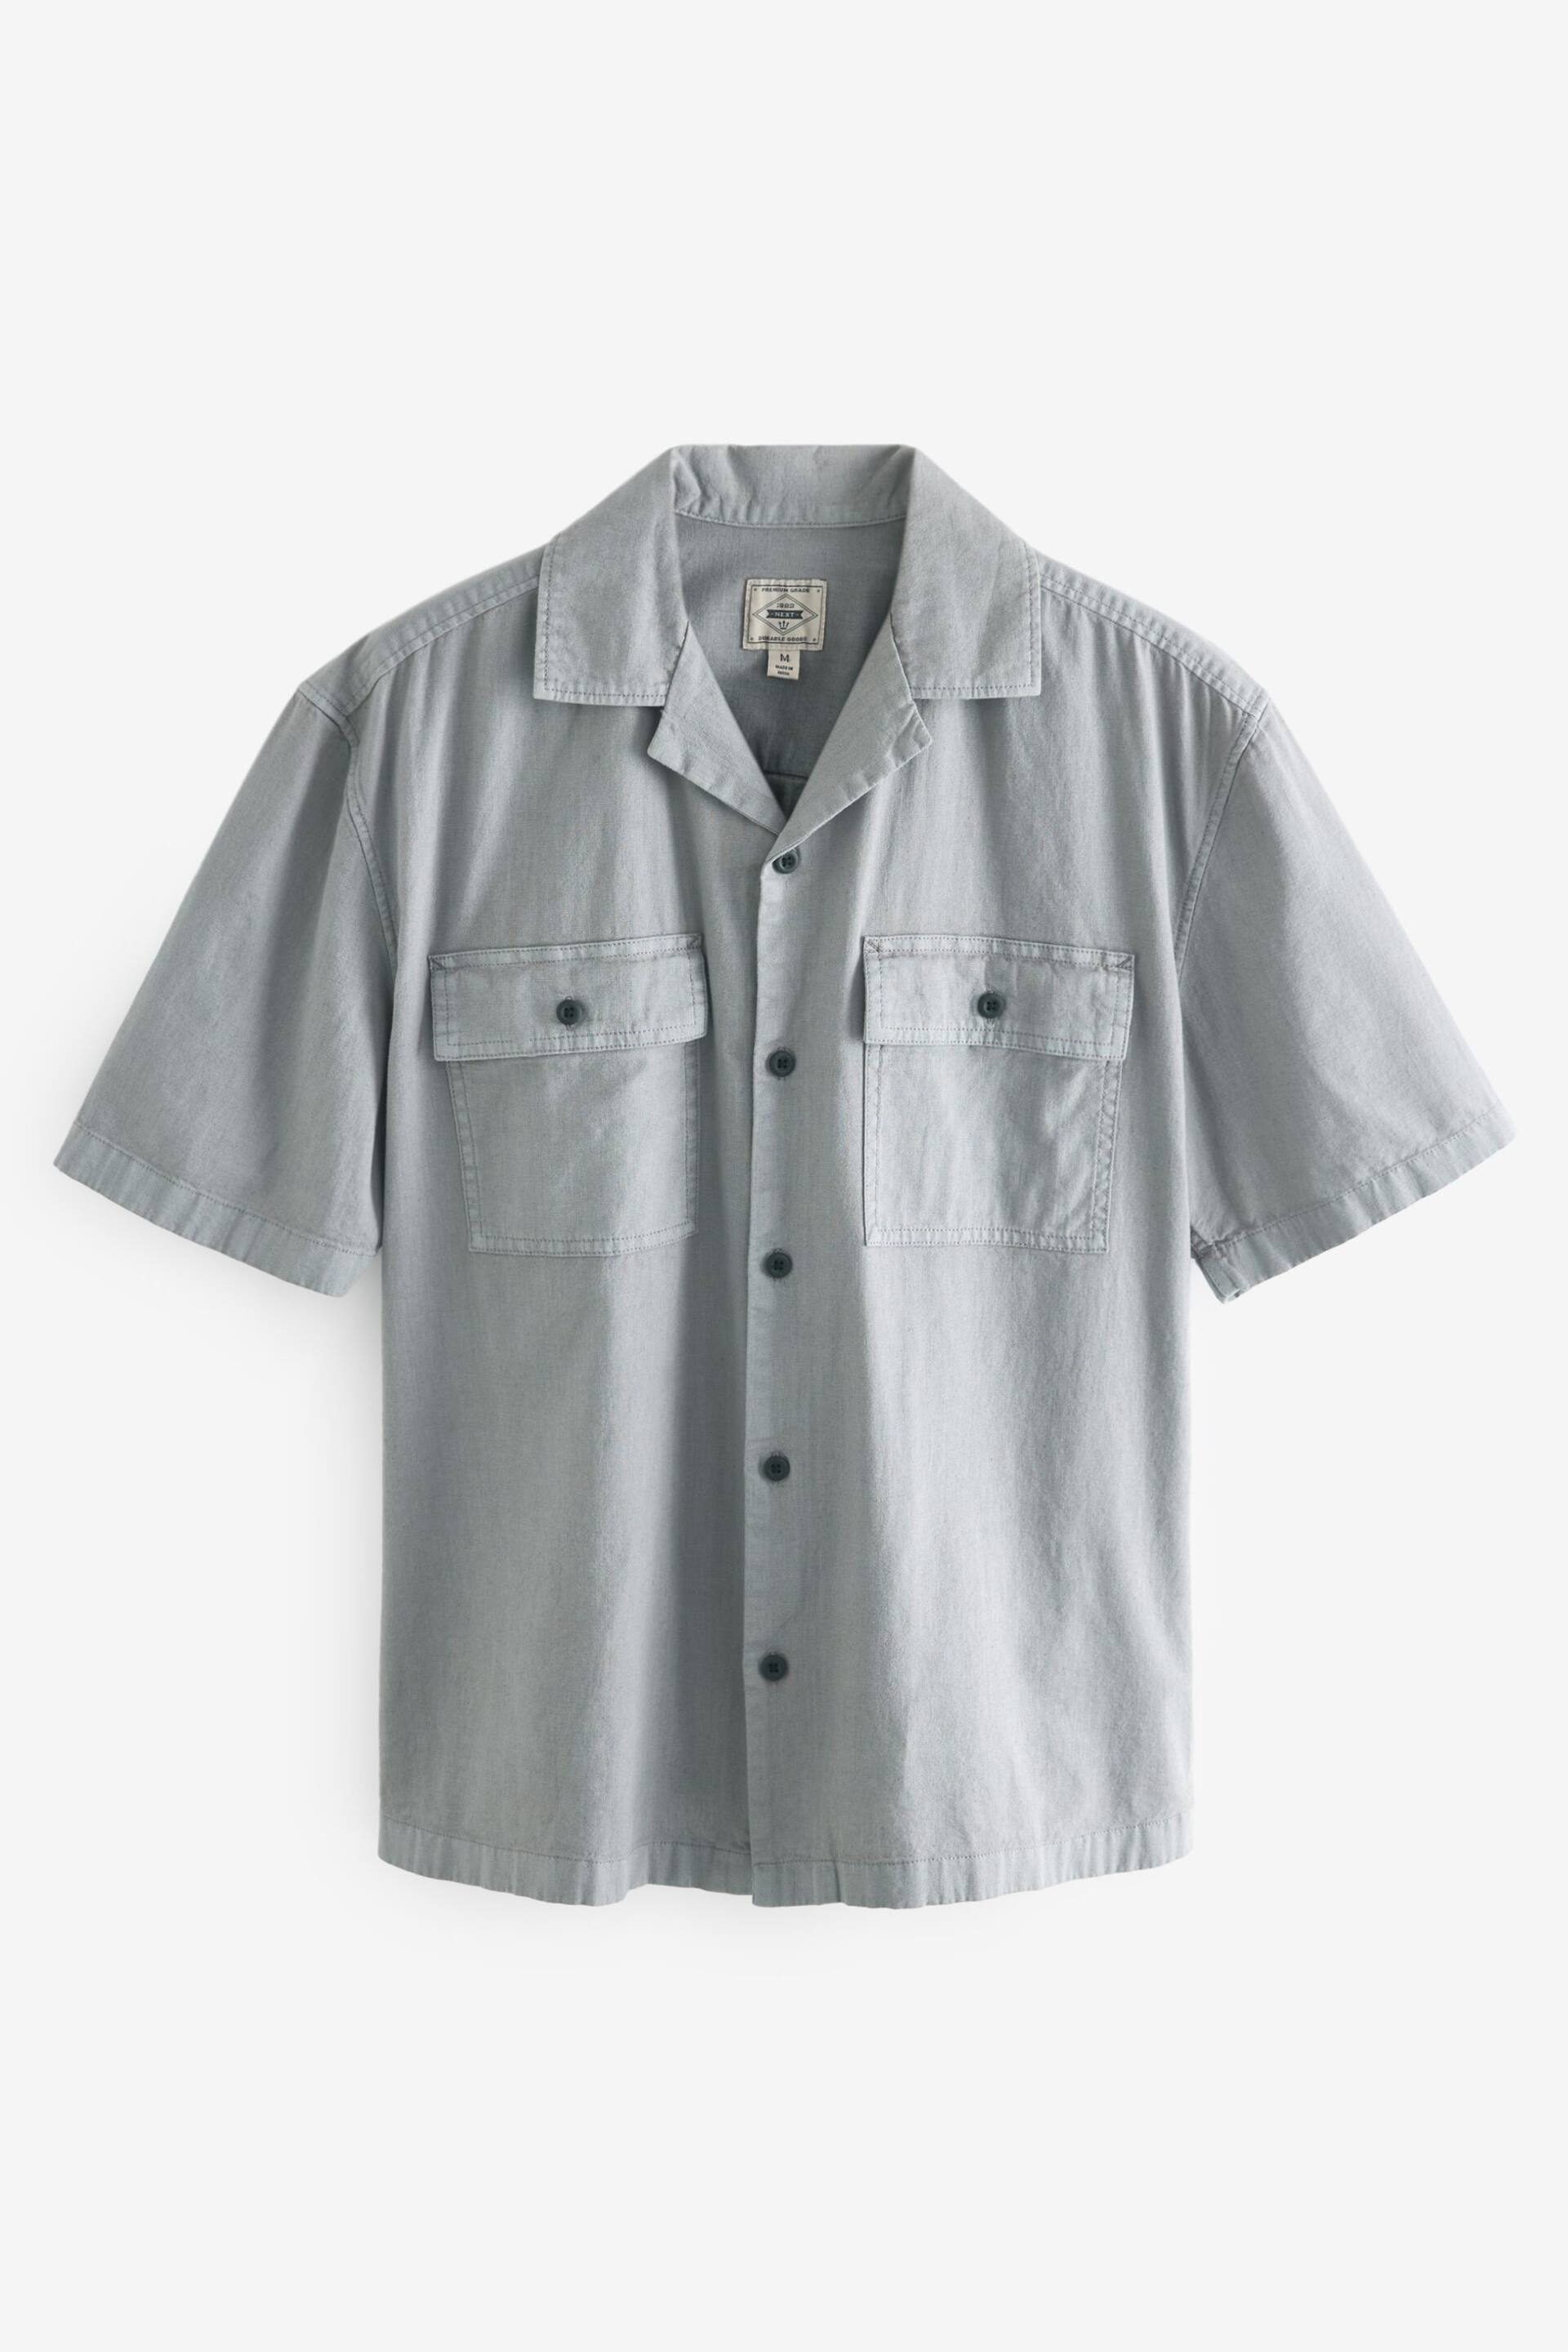 Grey Linen Blend Short Sleeve Shirt with Cuban Collar - Image 7 of 9